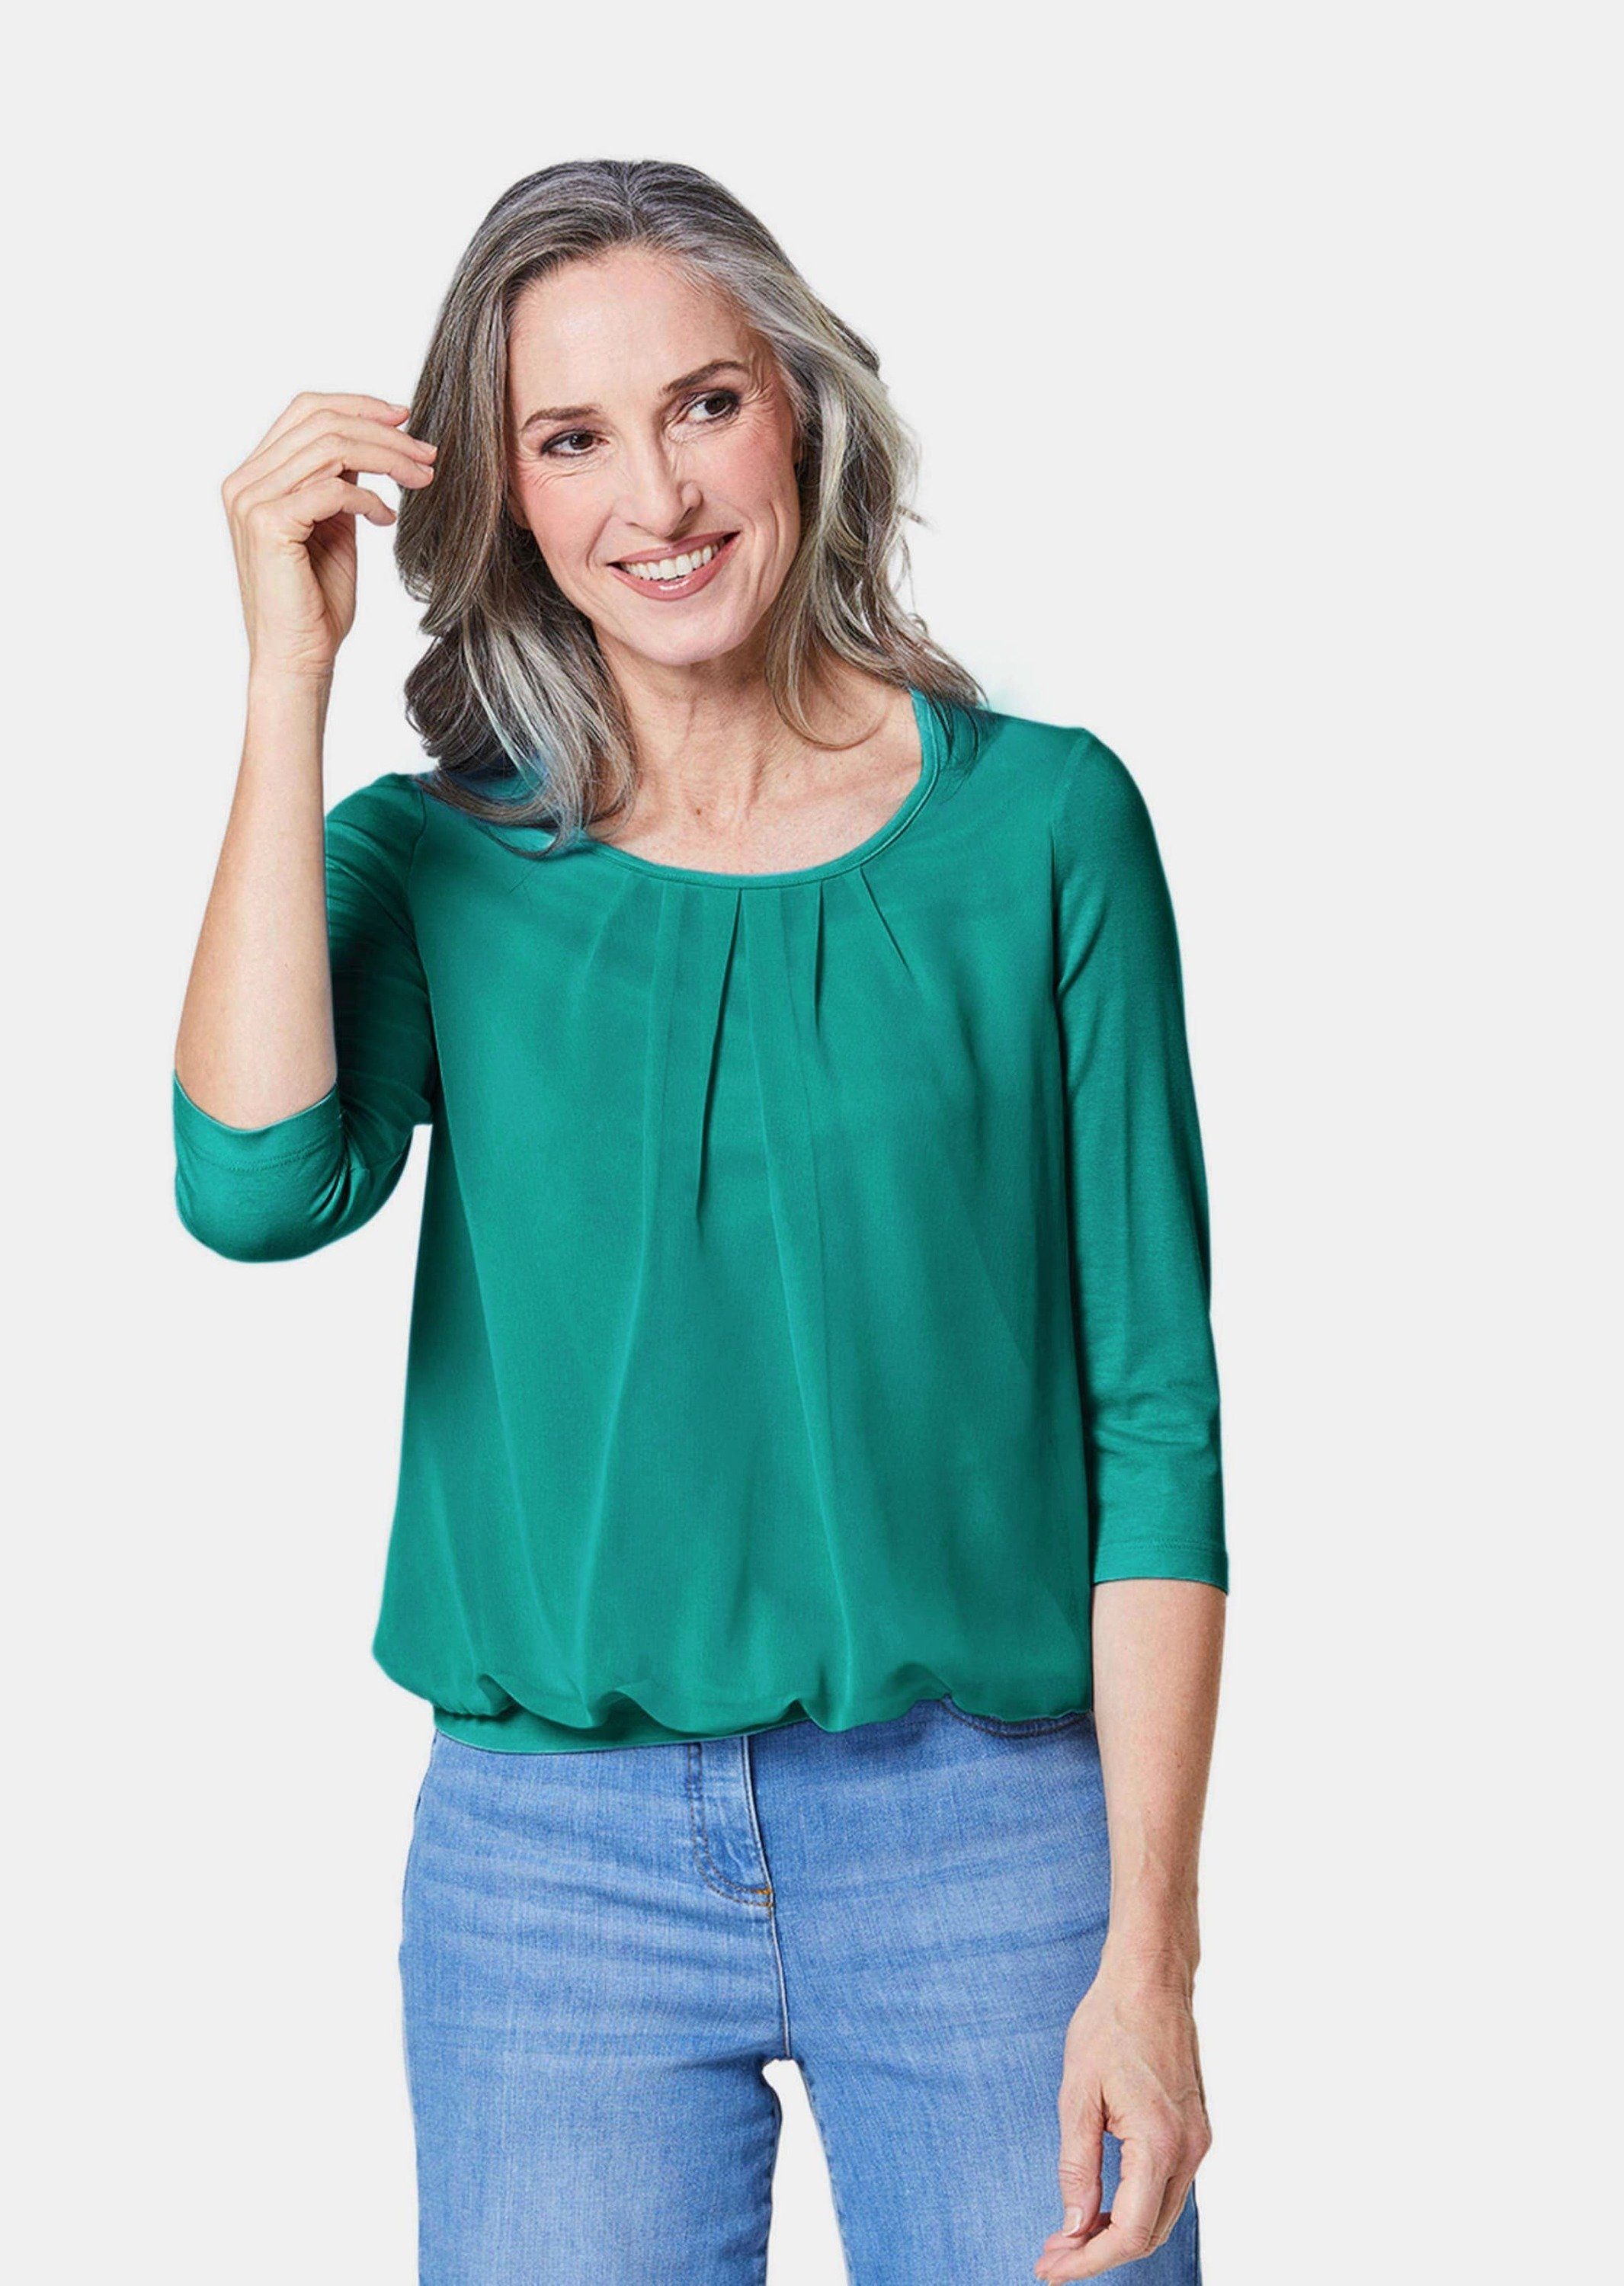 Blusen-Optik GOLDNER Gepflegtes smaragdgrün eleganter Shirt Kurzarmbluse in